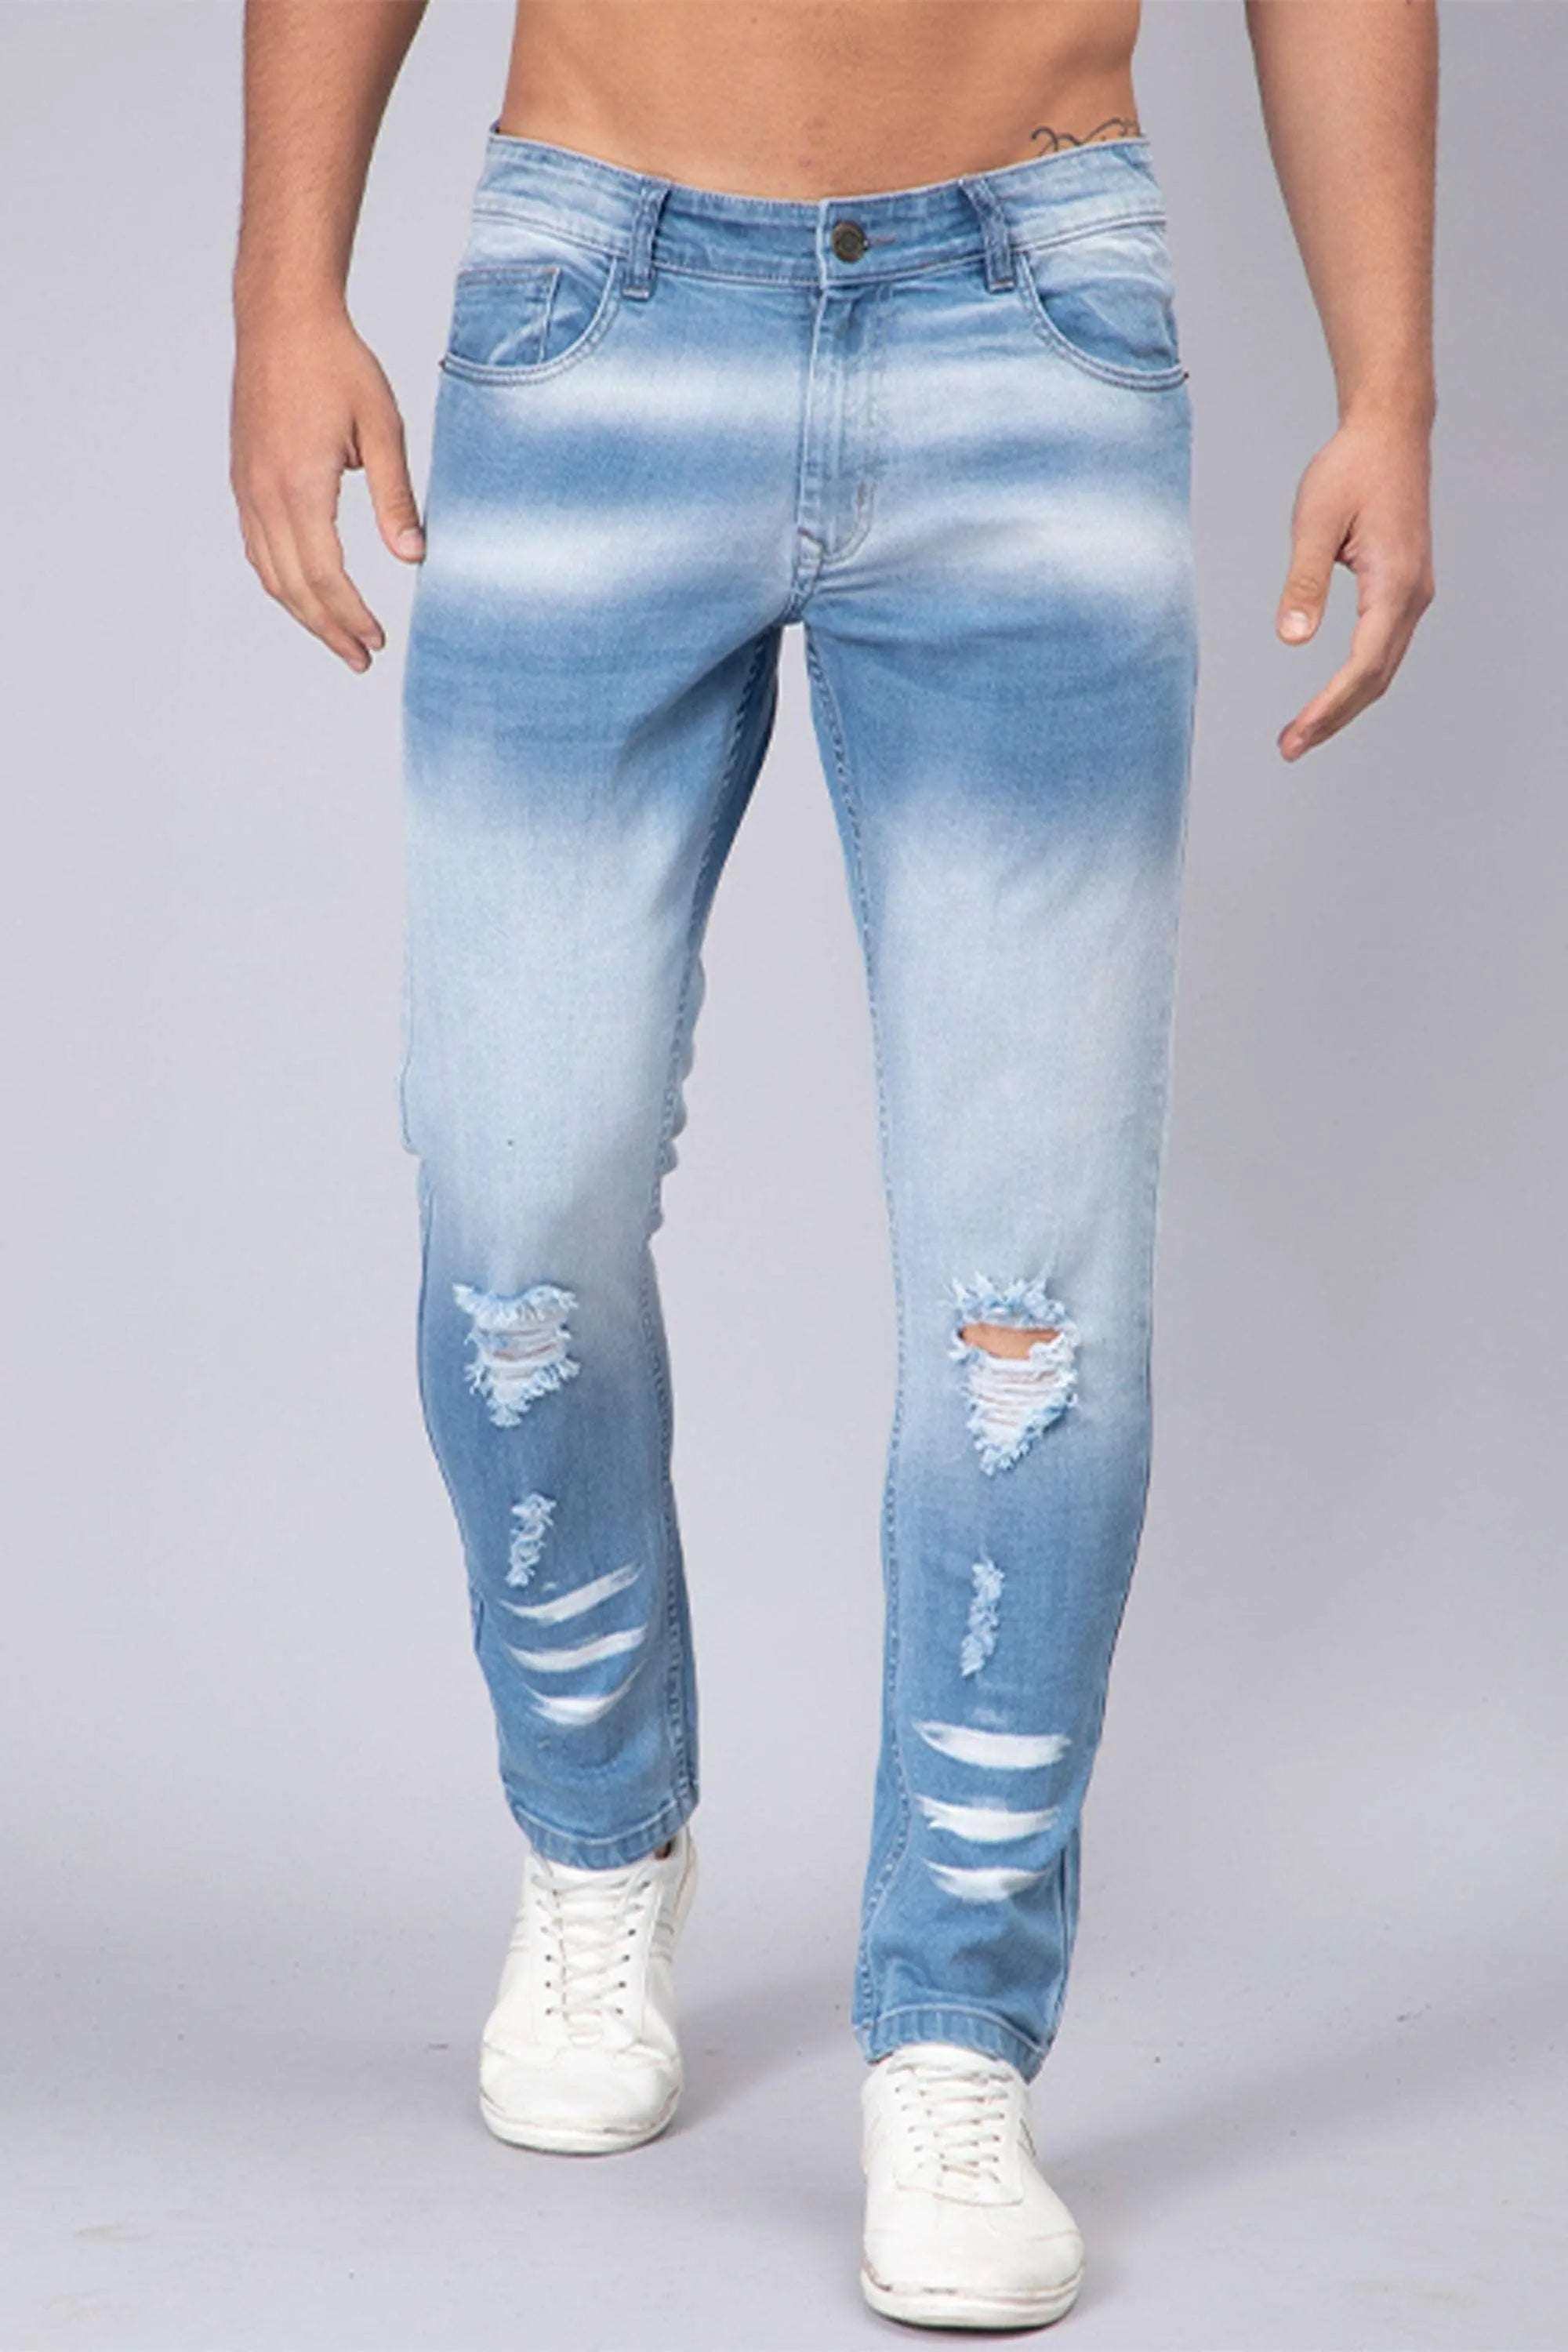 NYDJ | The Original Slimming Jeans | Women's Premium Jeans – NYDJ Apparel